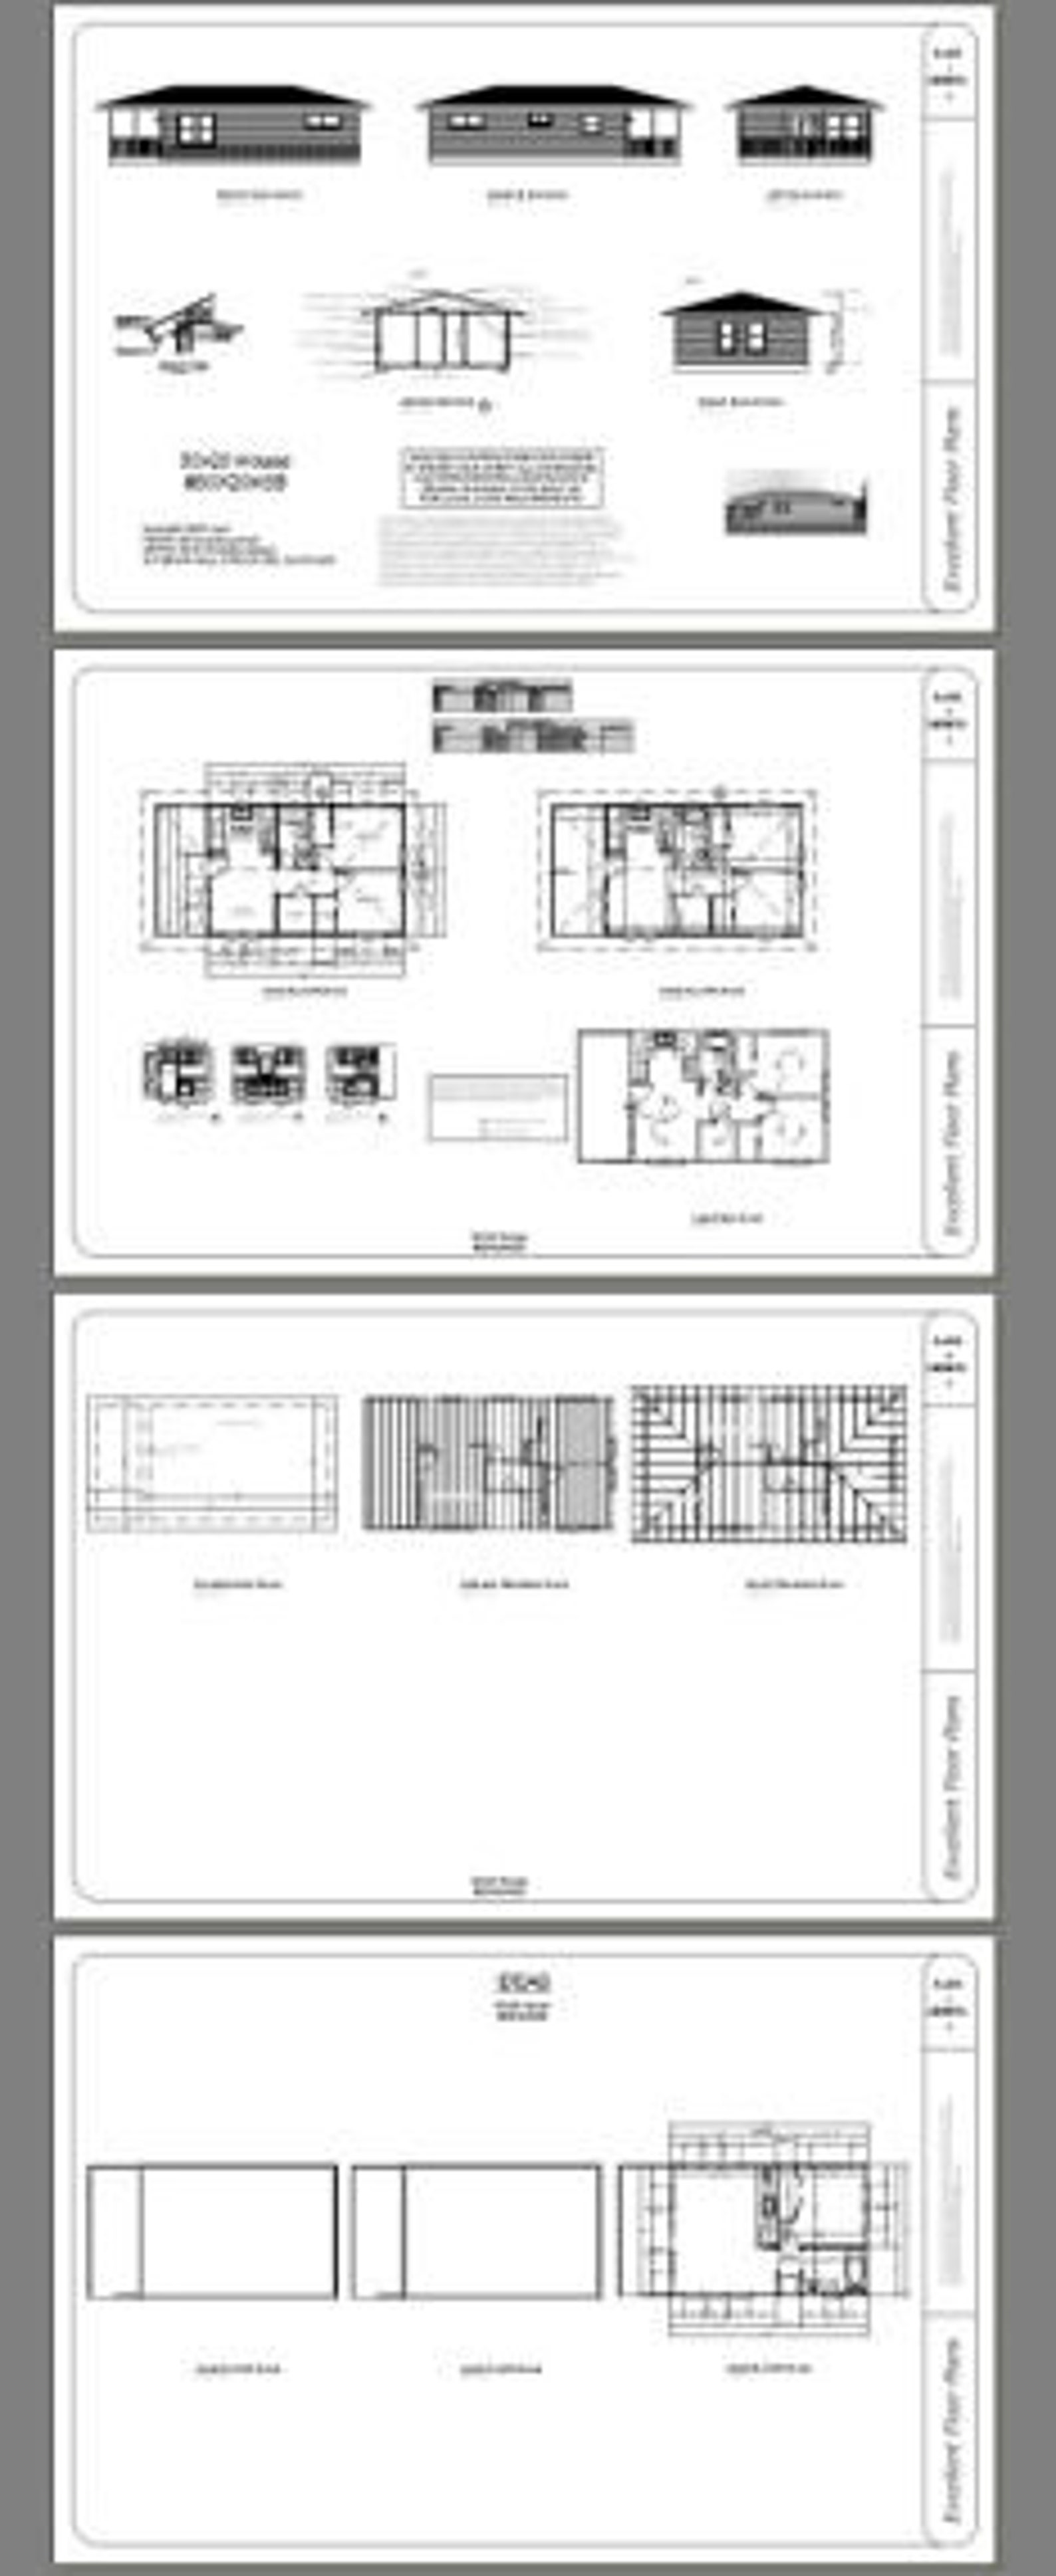 30x20 House 2-bedroom 1-bath 600 Sq Ft PDF Floor Plan Instant Download ...